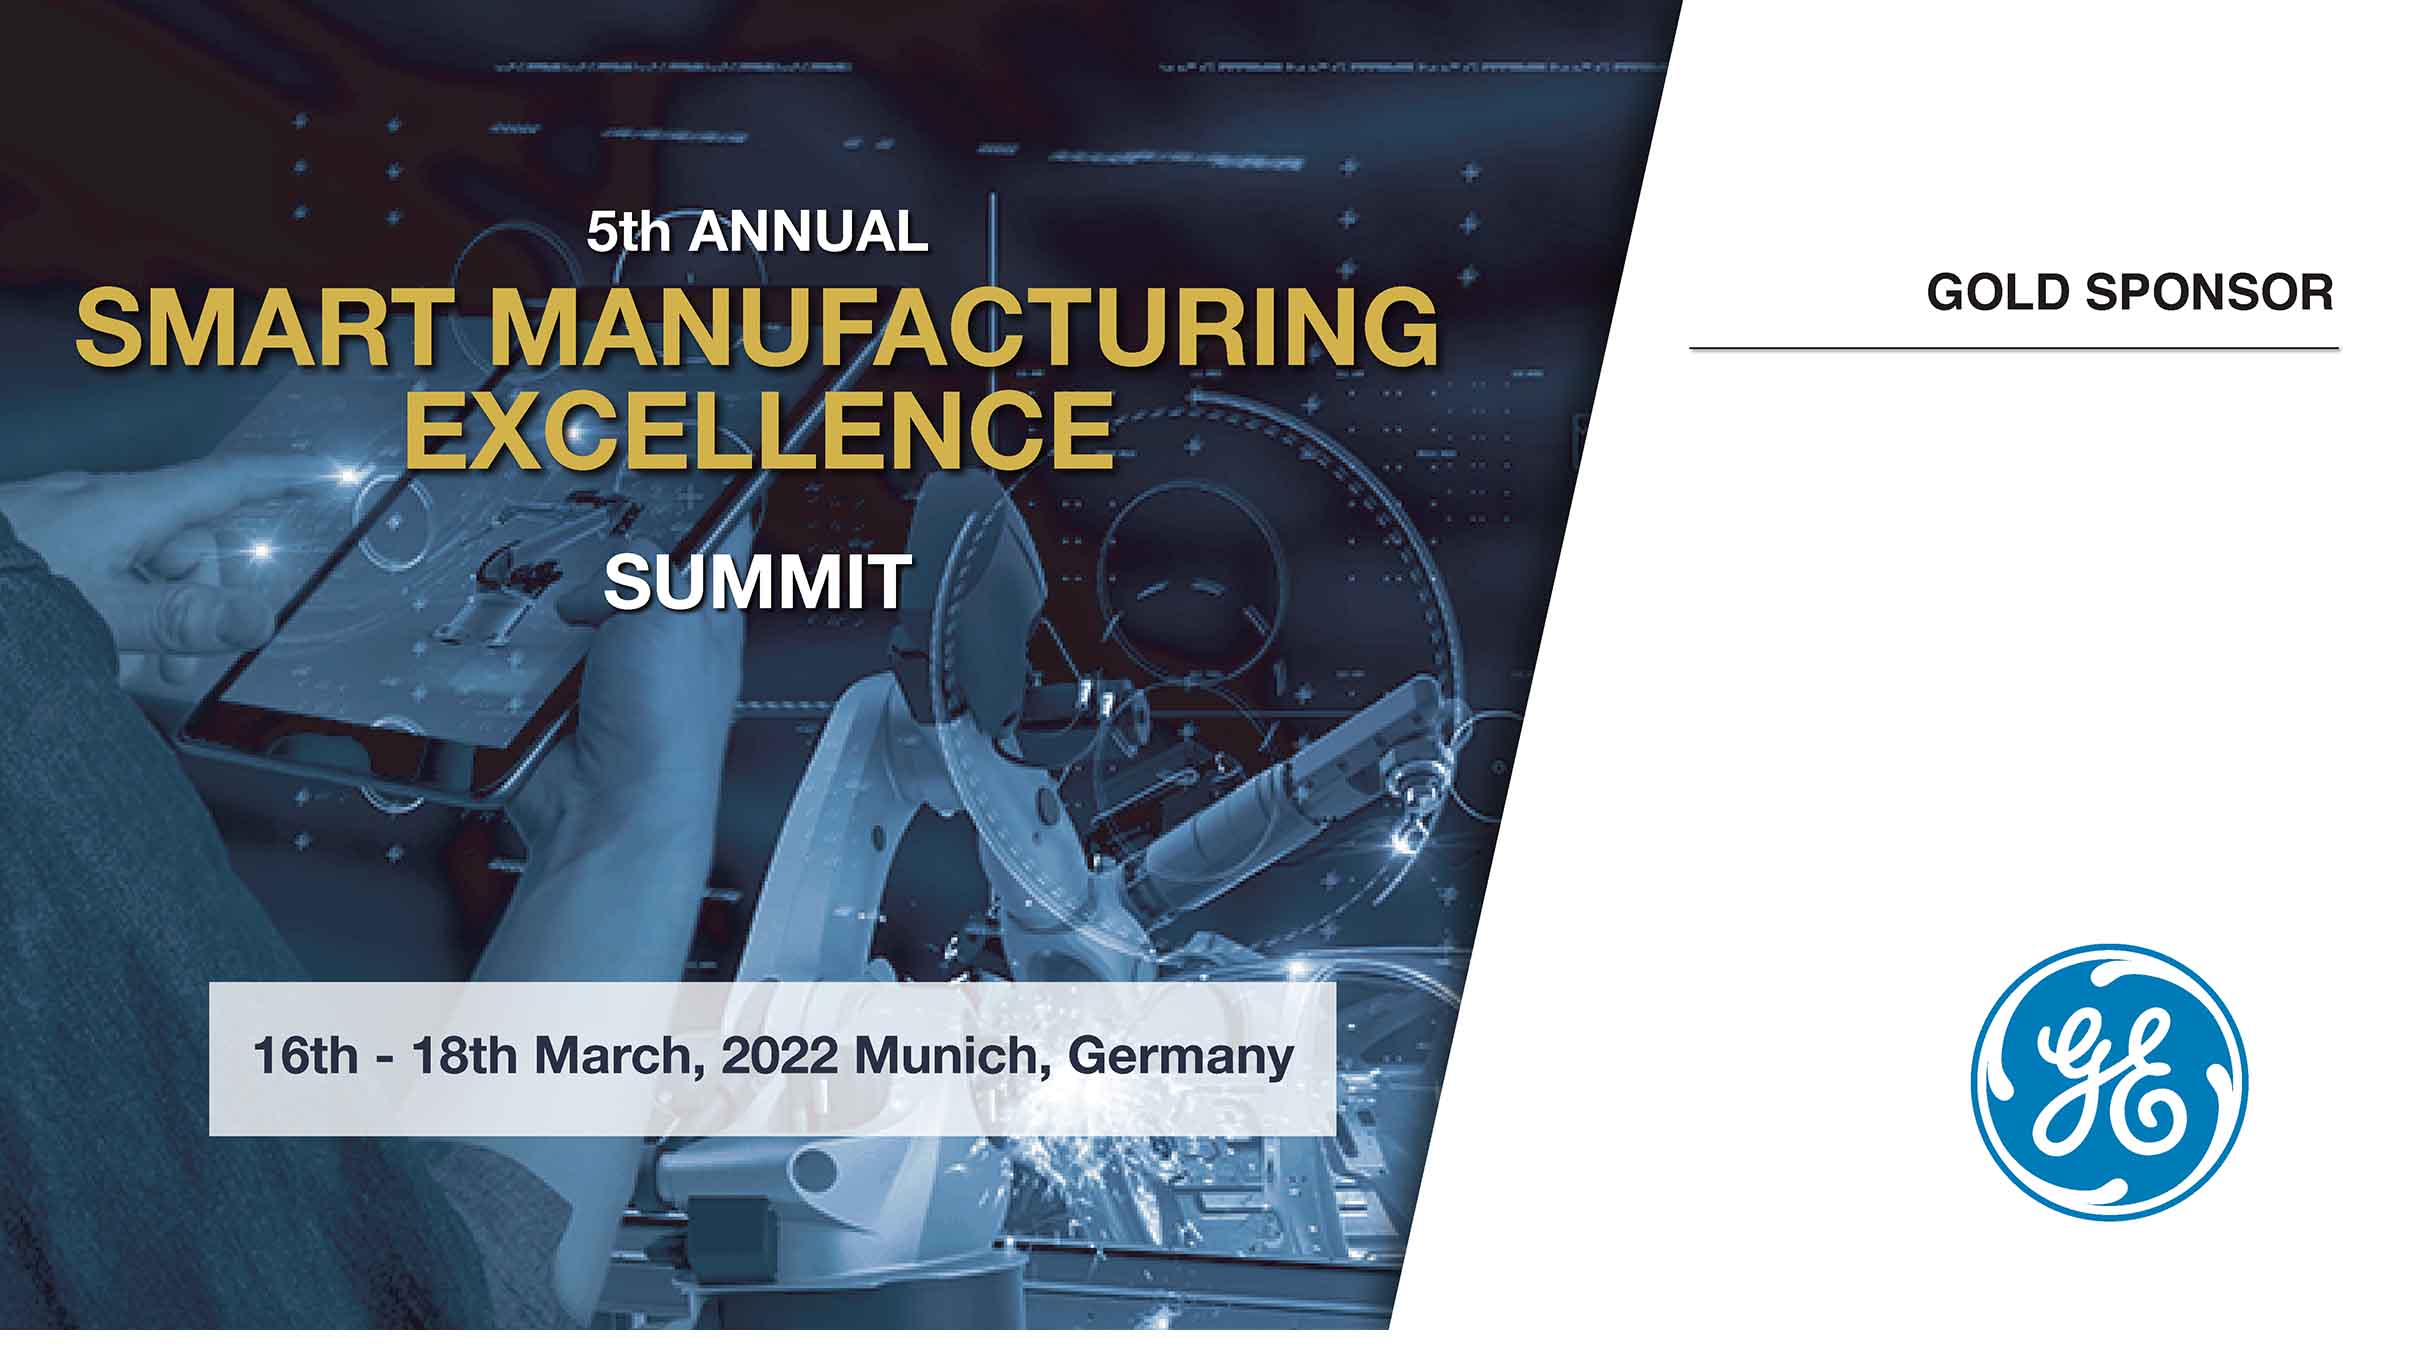 Smart Manufacturing Excellence Summit | GE Digital Gold Sponsor